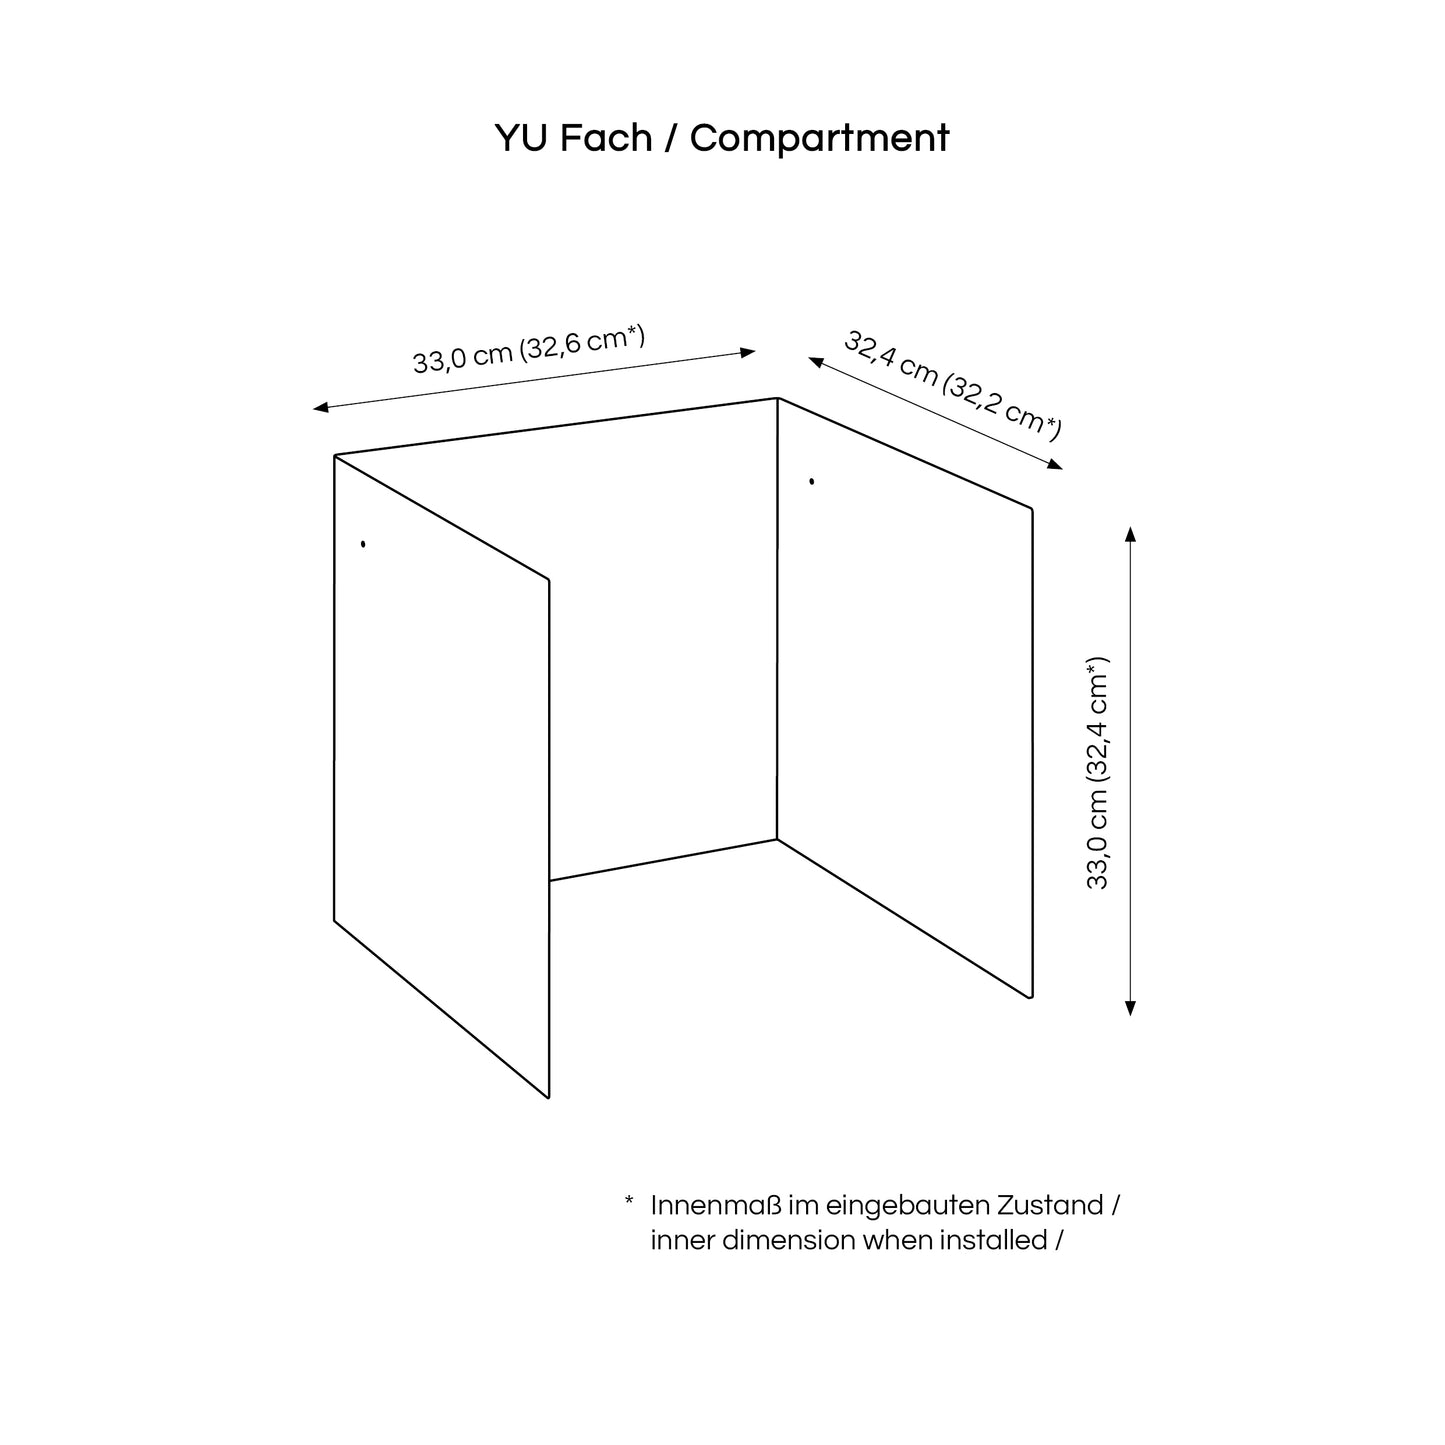 YU Compartment